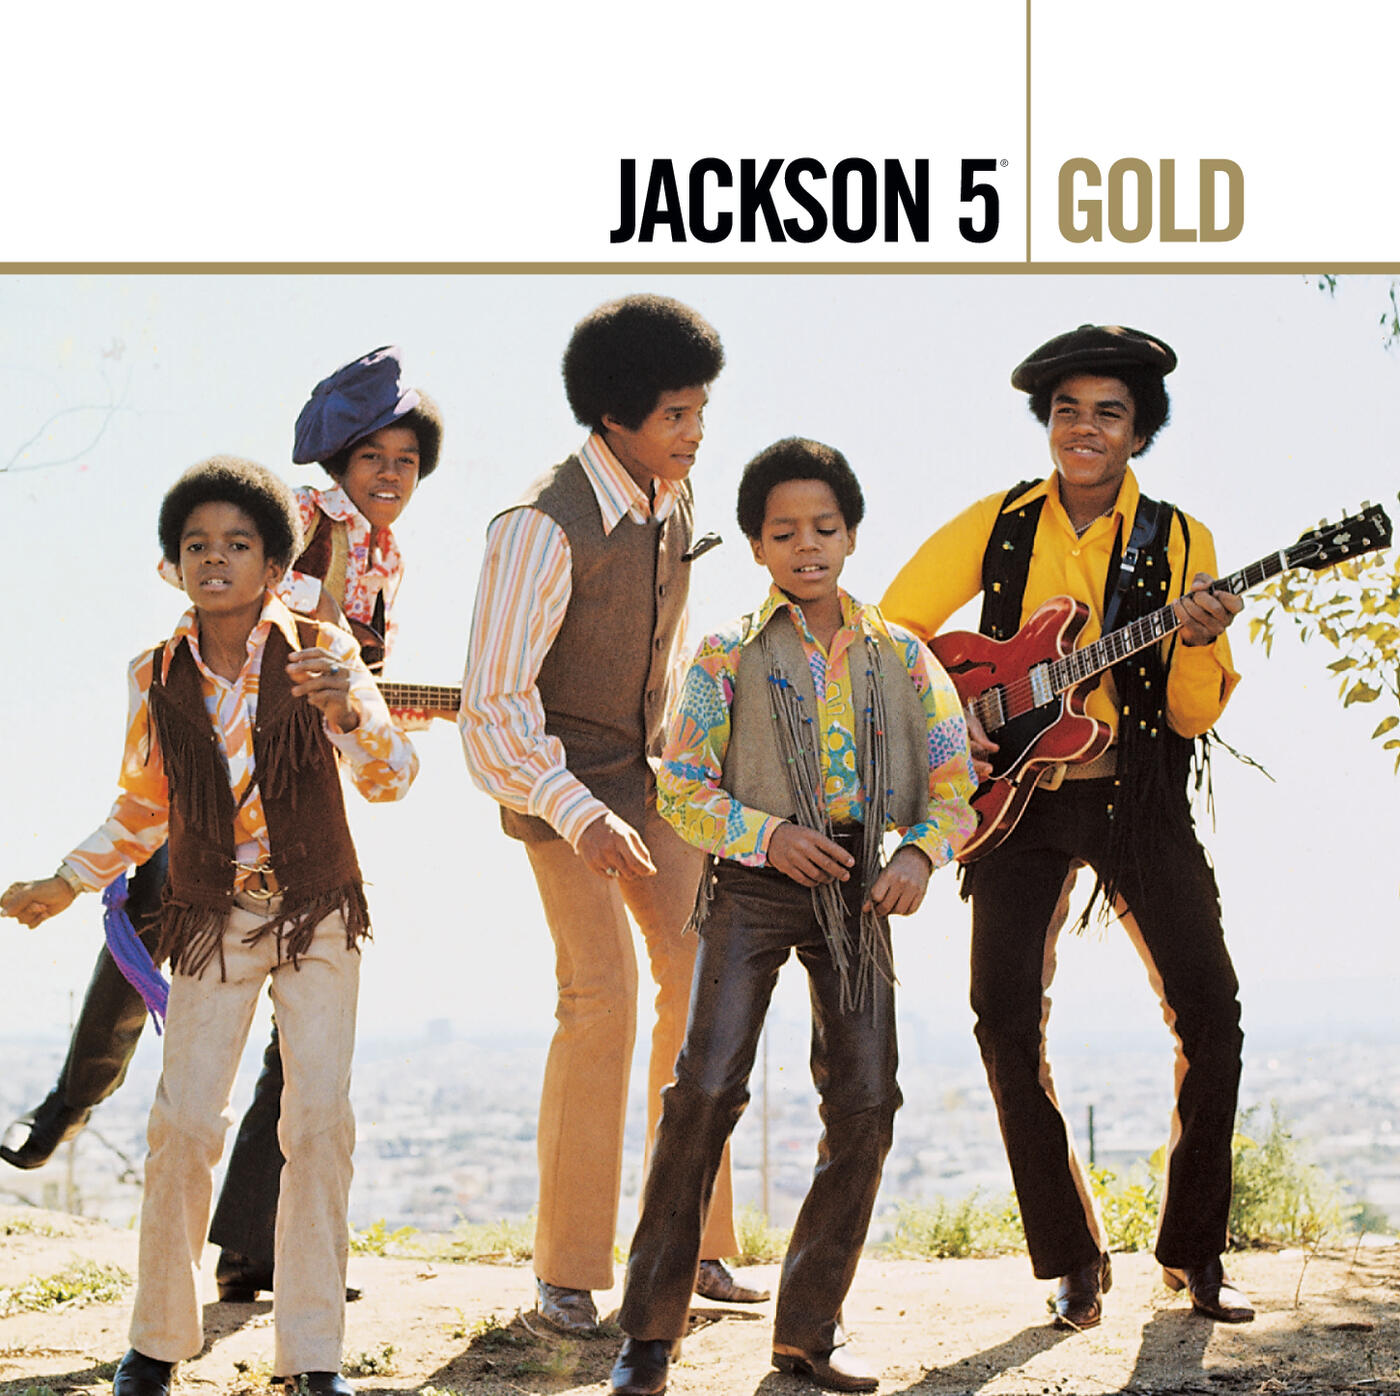 Michael Jackson Motown Group 10x8 Glossy Music Photo Print Picture Jackson 5 